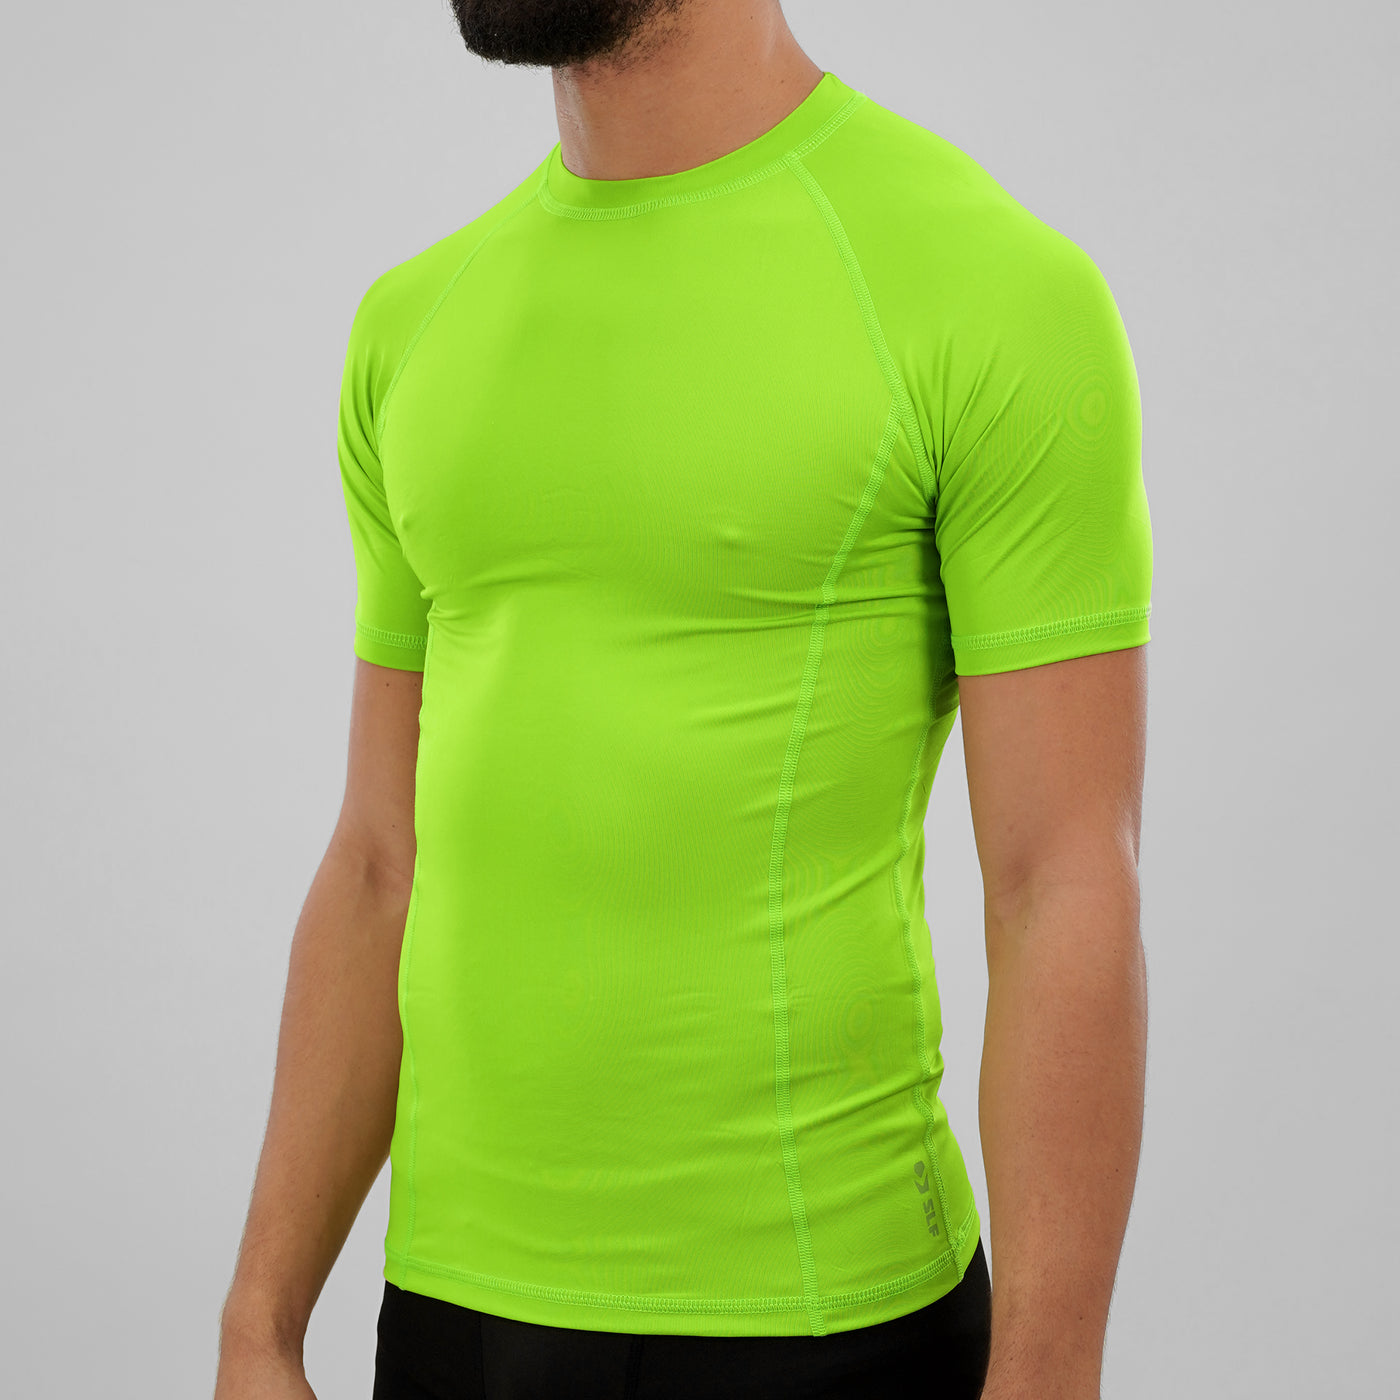 Lizard Green Compression Shirt